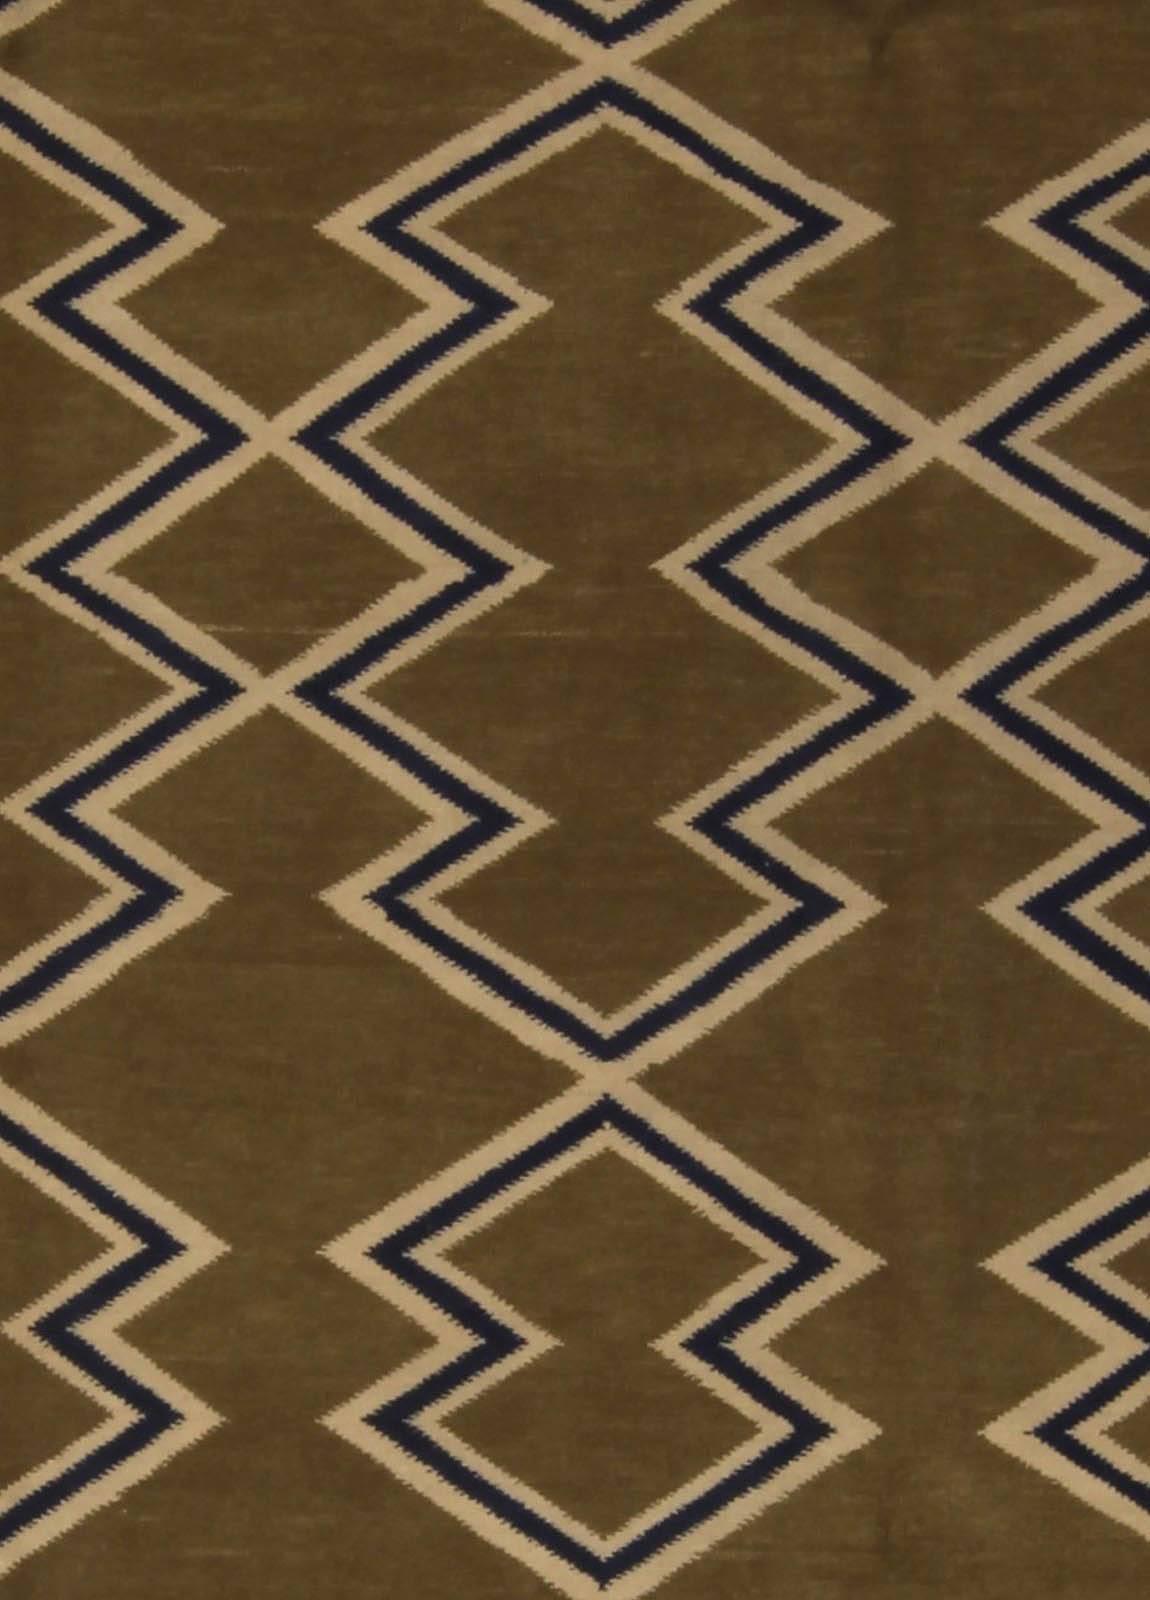 Modern Aztec geometric design handmade rug by Doris Leslie Blau.
Size: 9'0